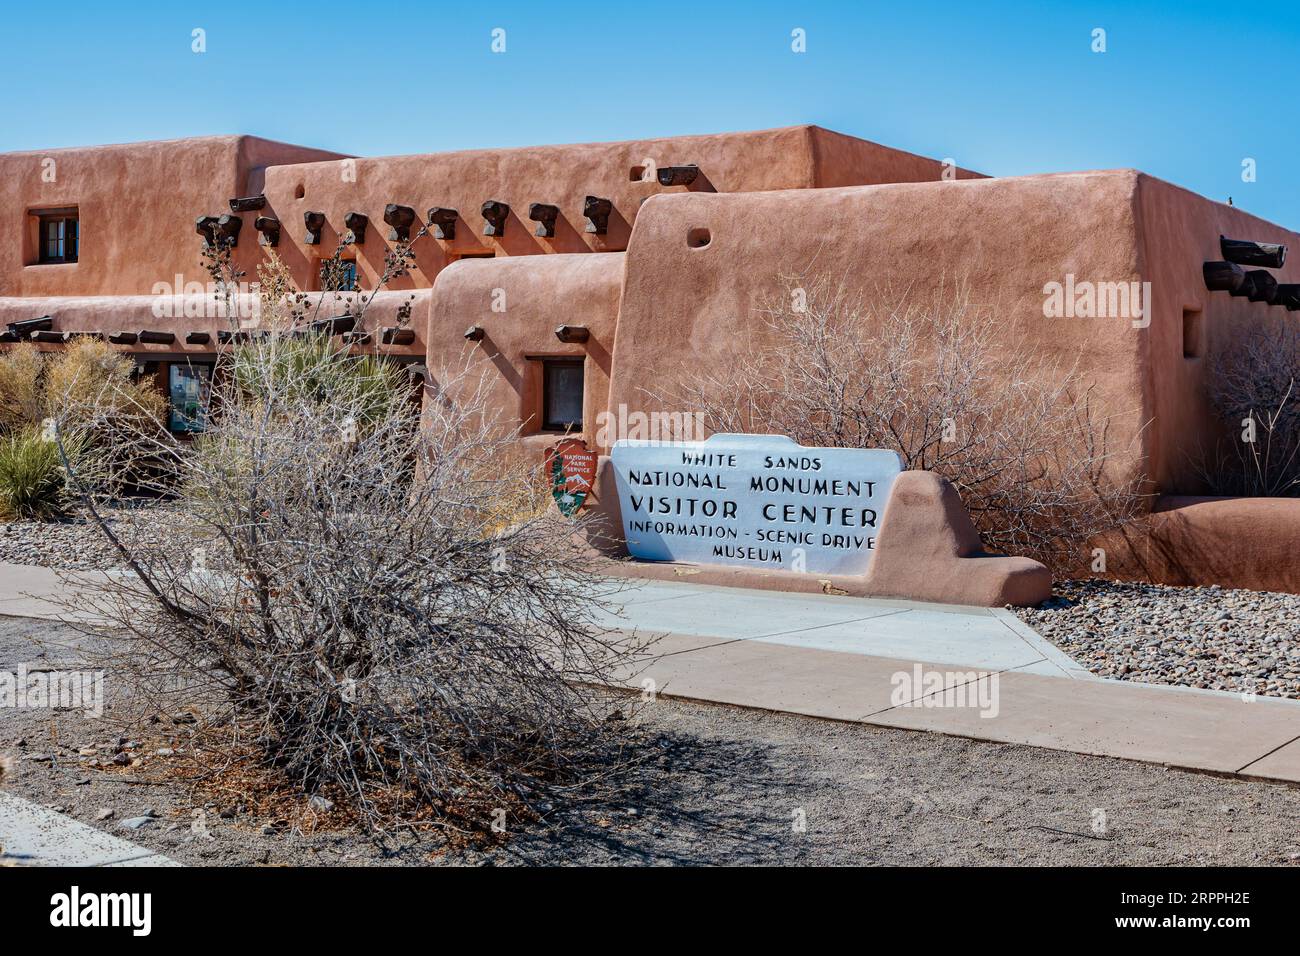 Ingresso al White Sands National Monument Visitor Center vicino ad Alamogordo, New Mexico Foto Stock